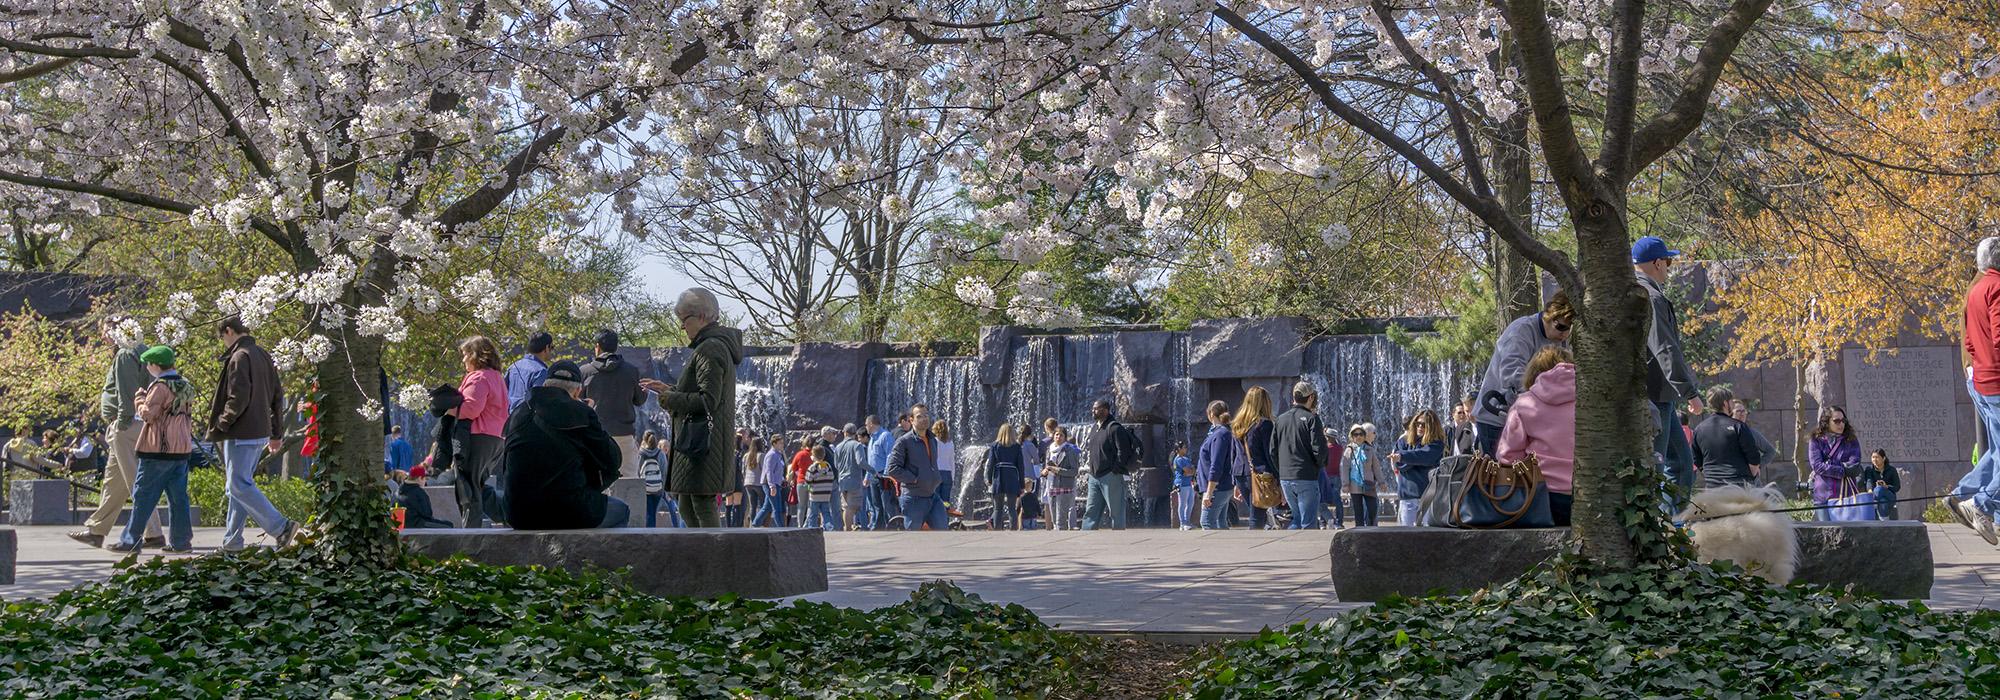 Franklin D. Roosevelt Memorial, Washington, D.C.